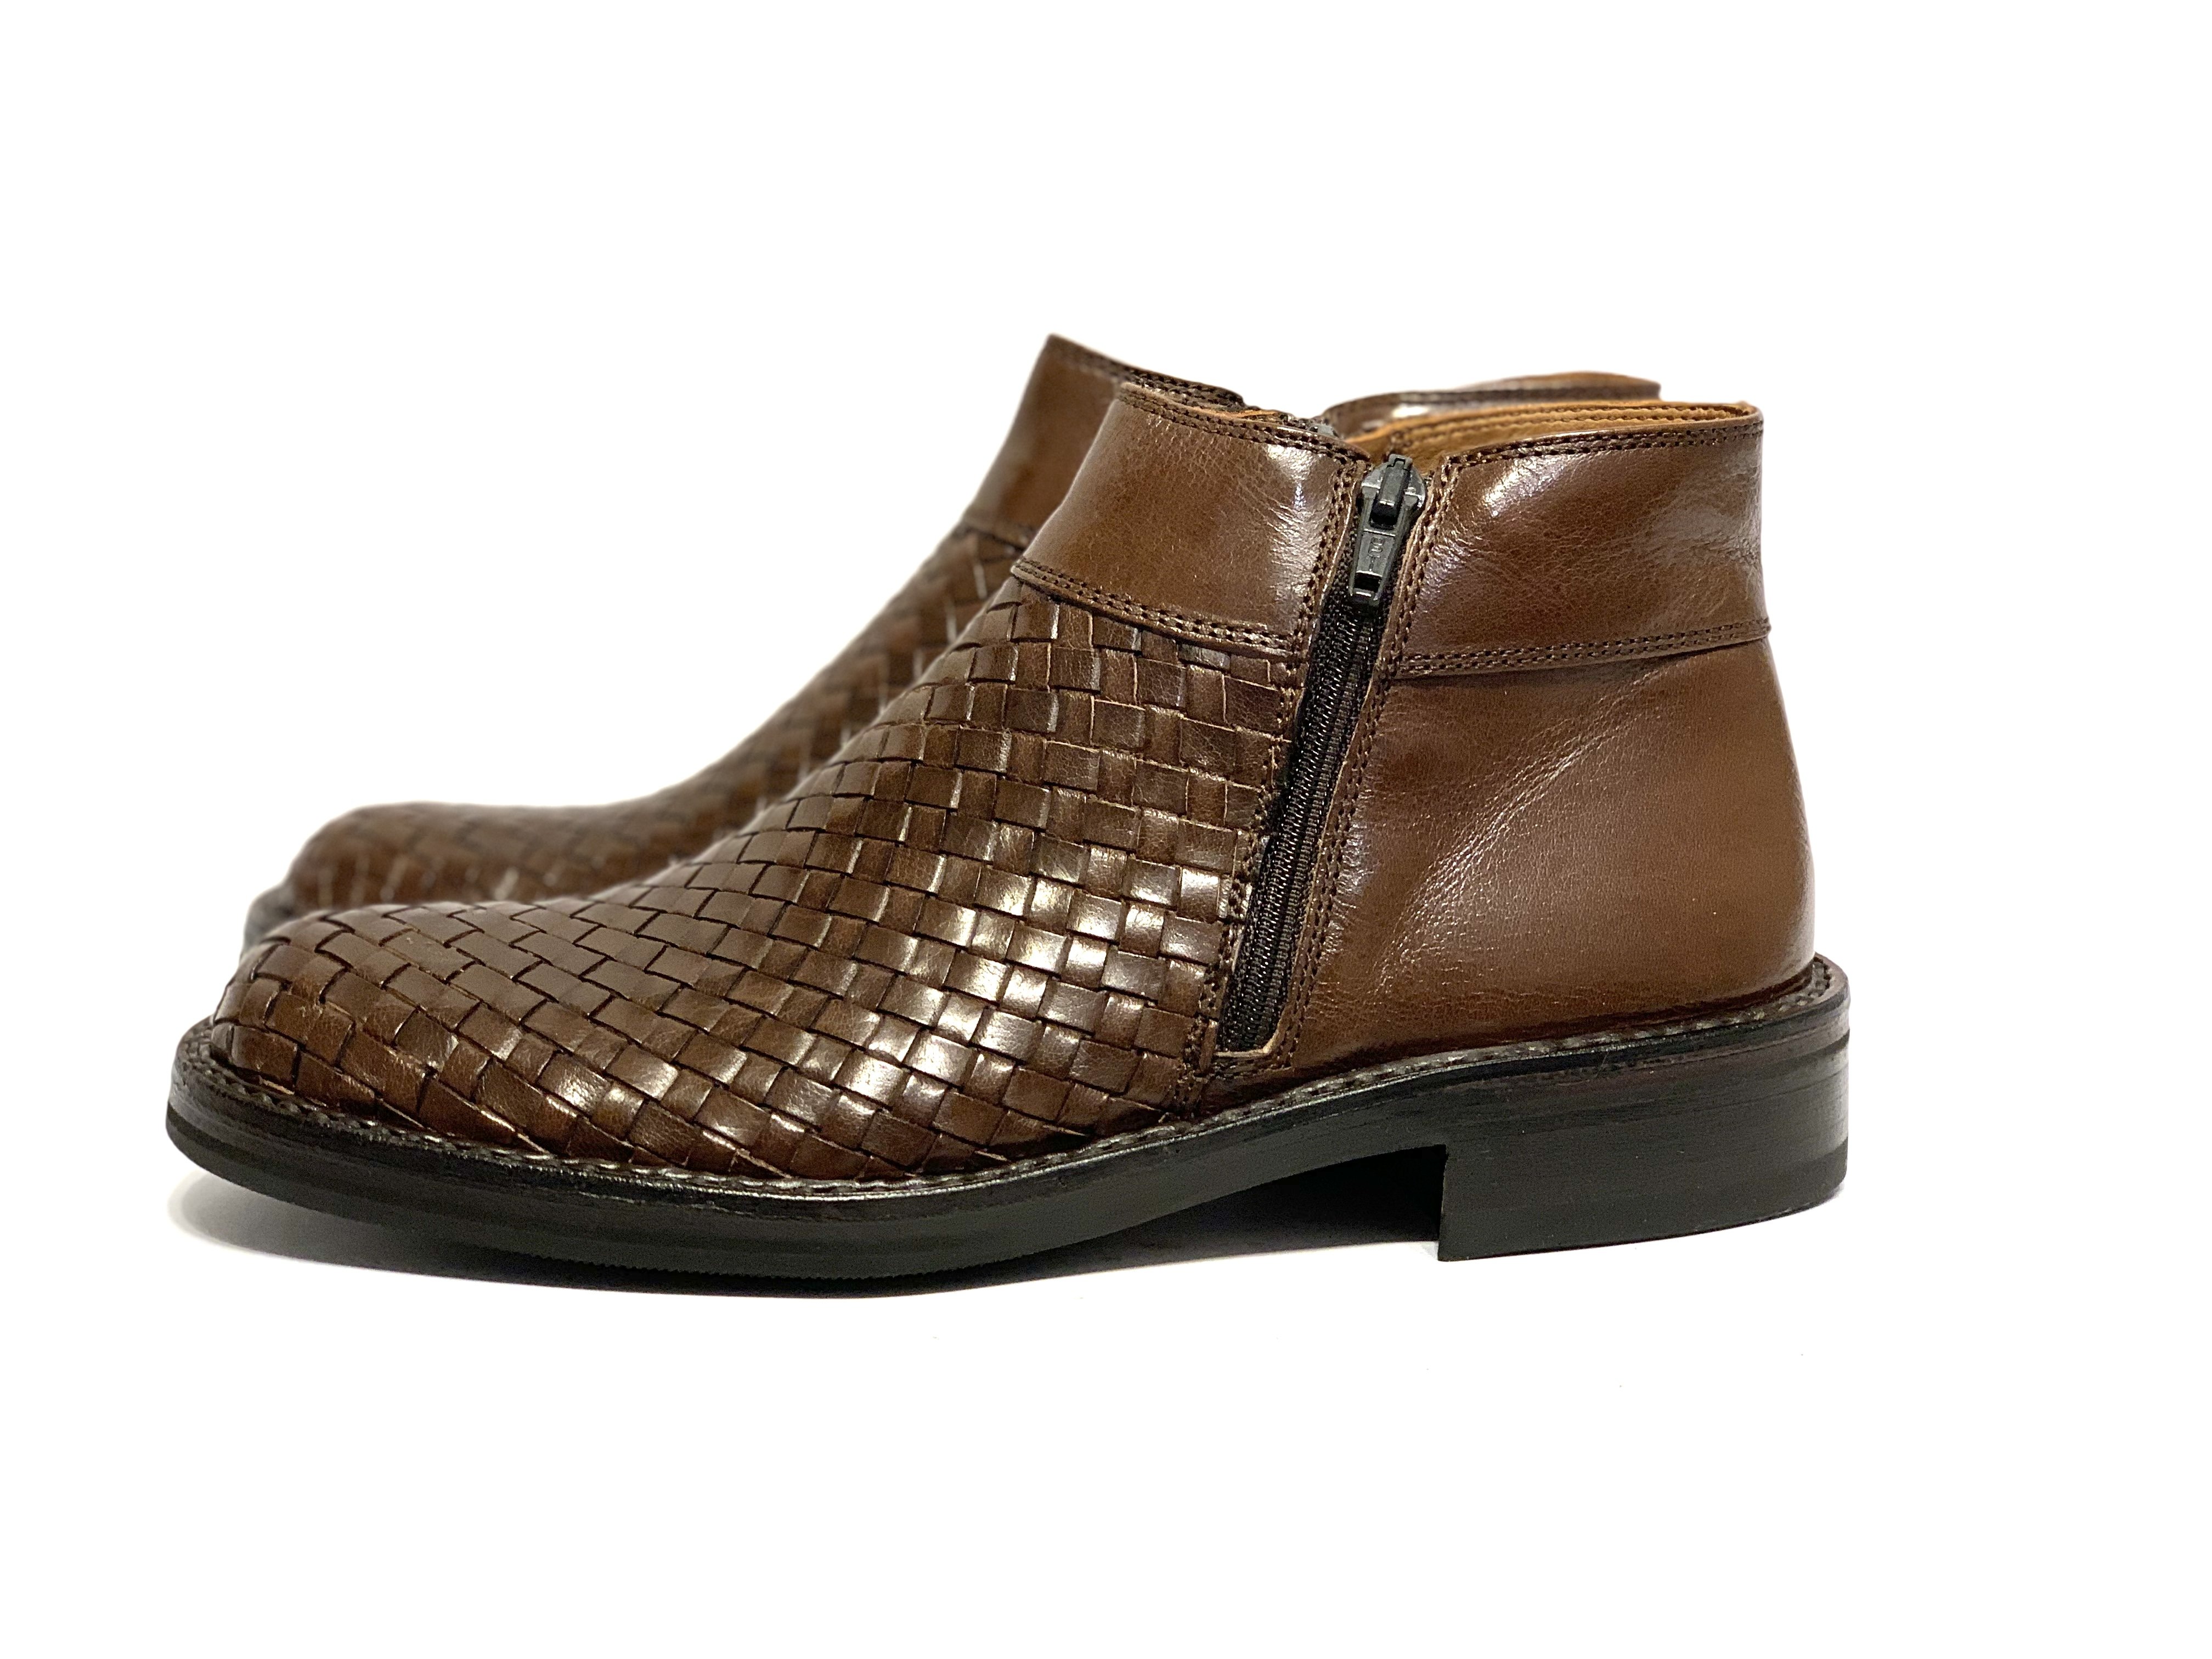 flet støvle, brun 836 - Bubetti Fiona sko